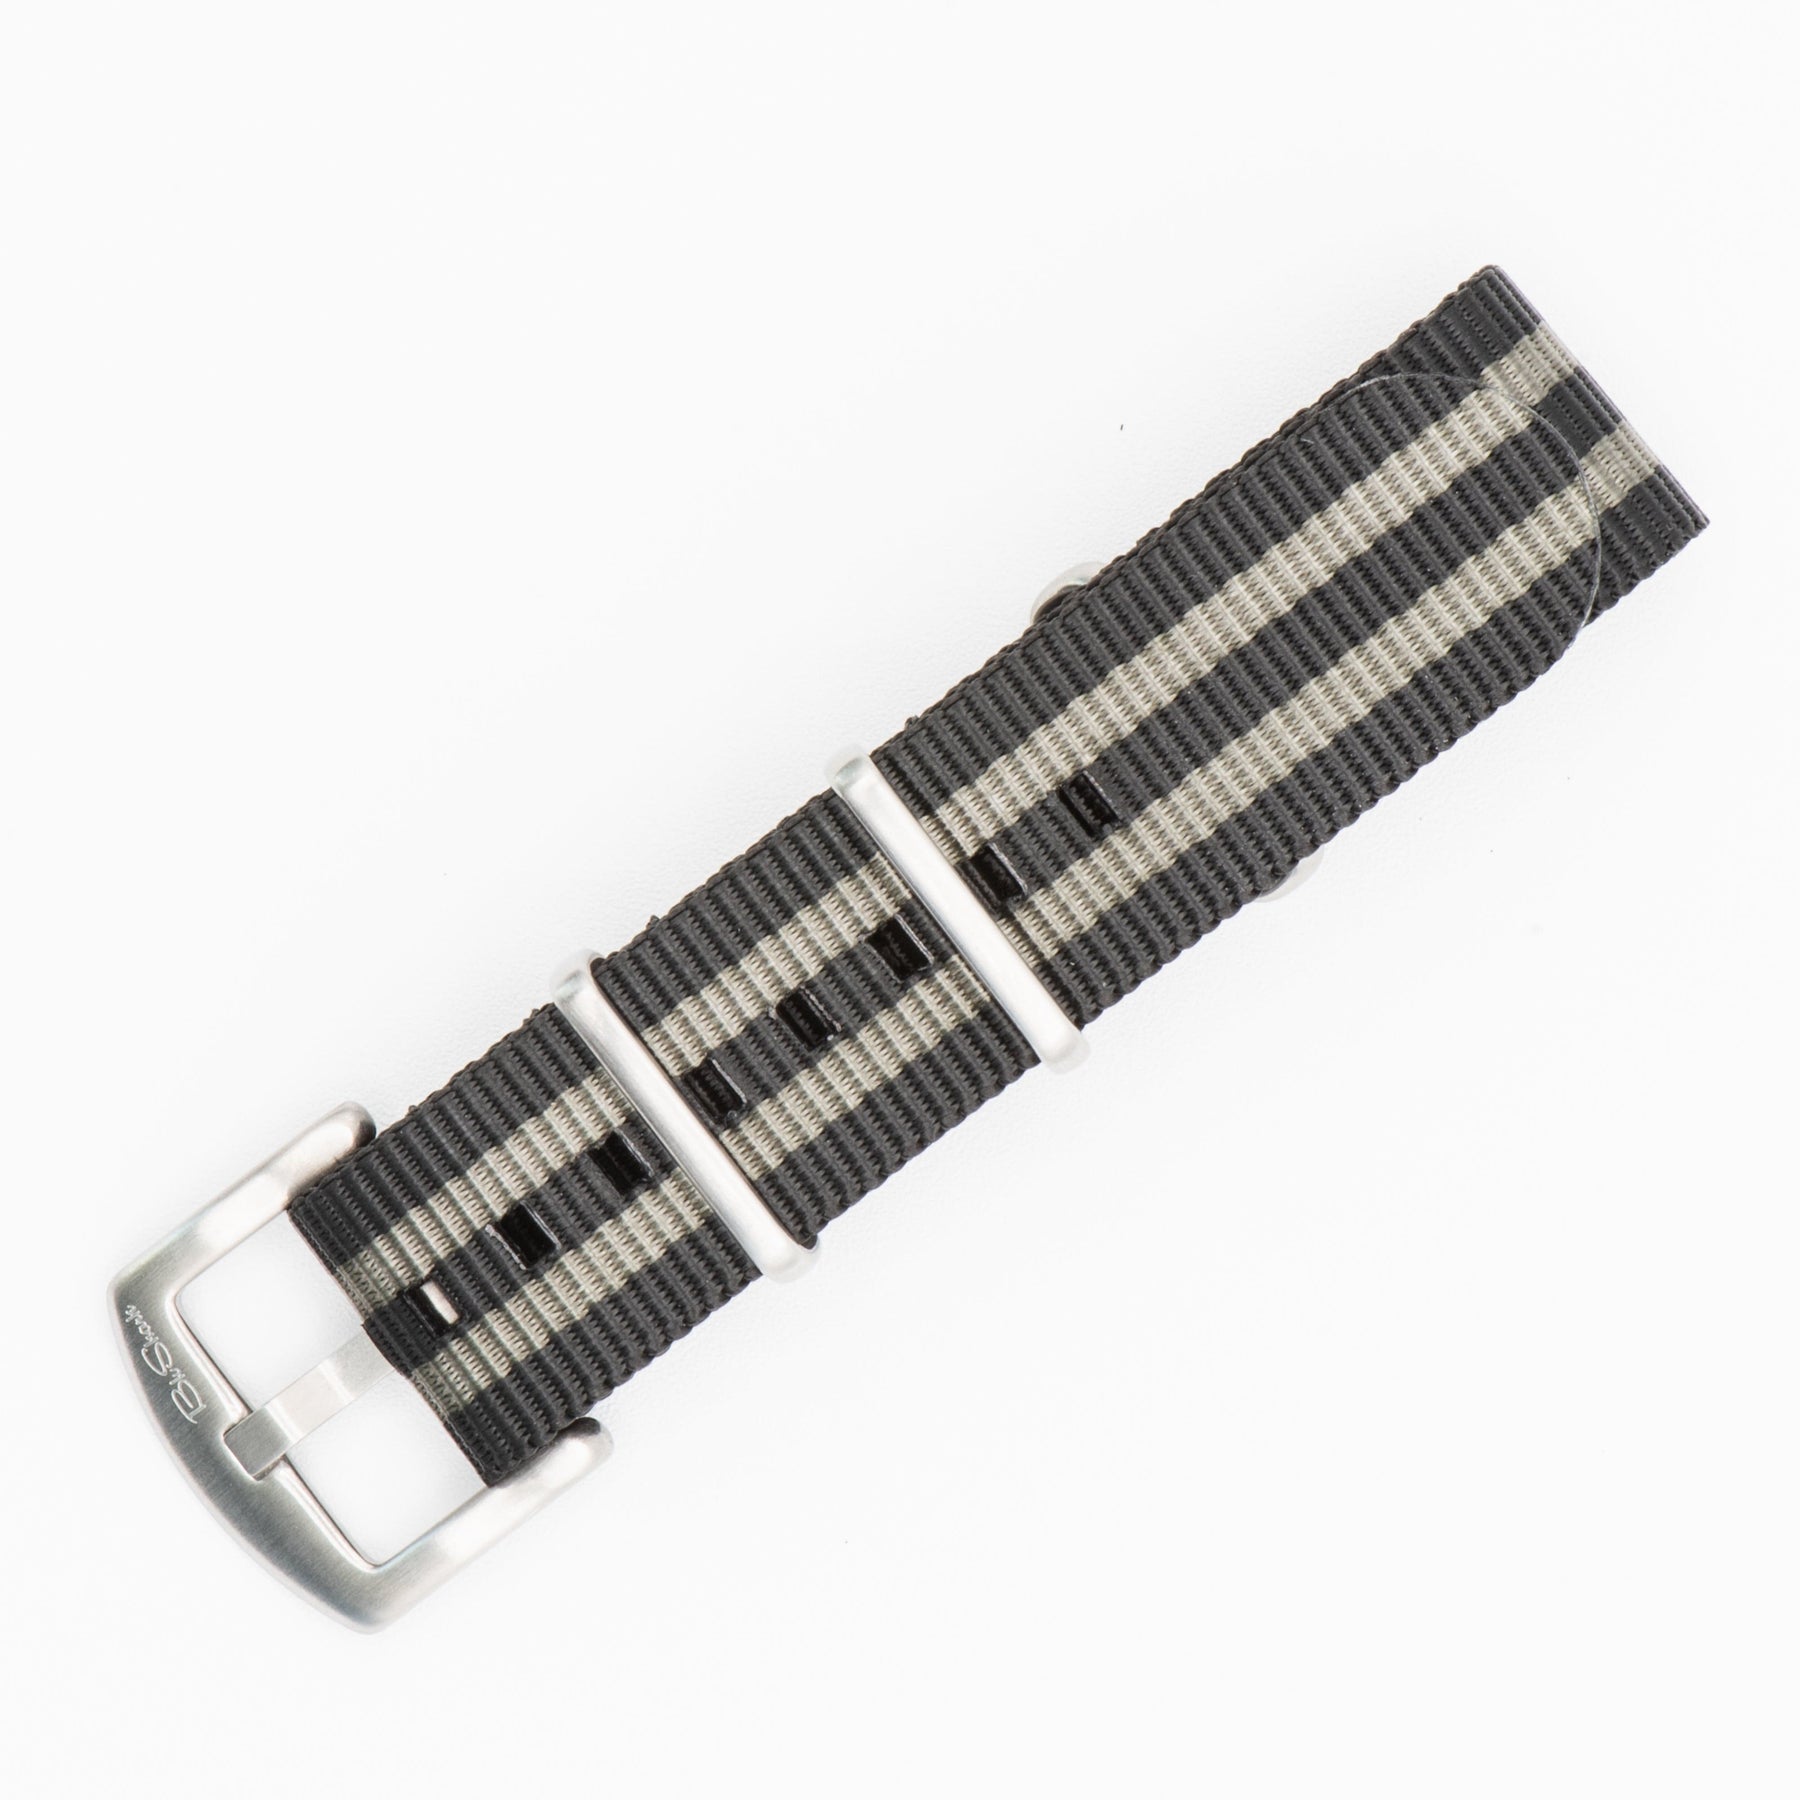 Bond' mesh watch bracelet - Stainless steel BOND type Milanese watch strap